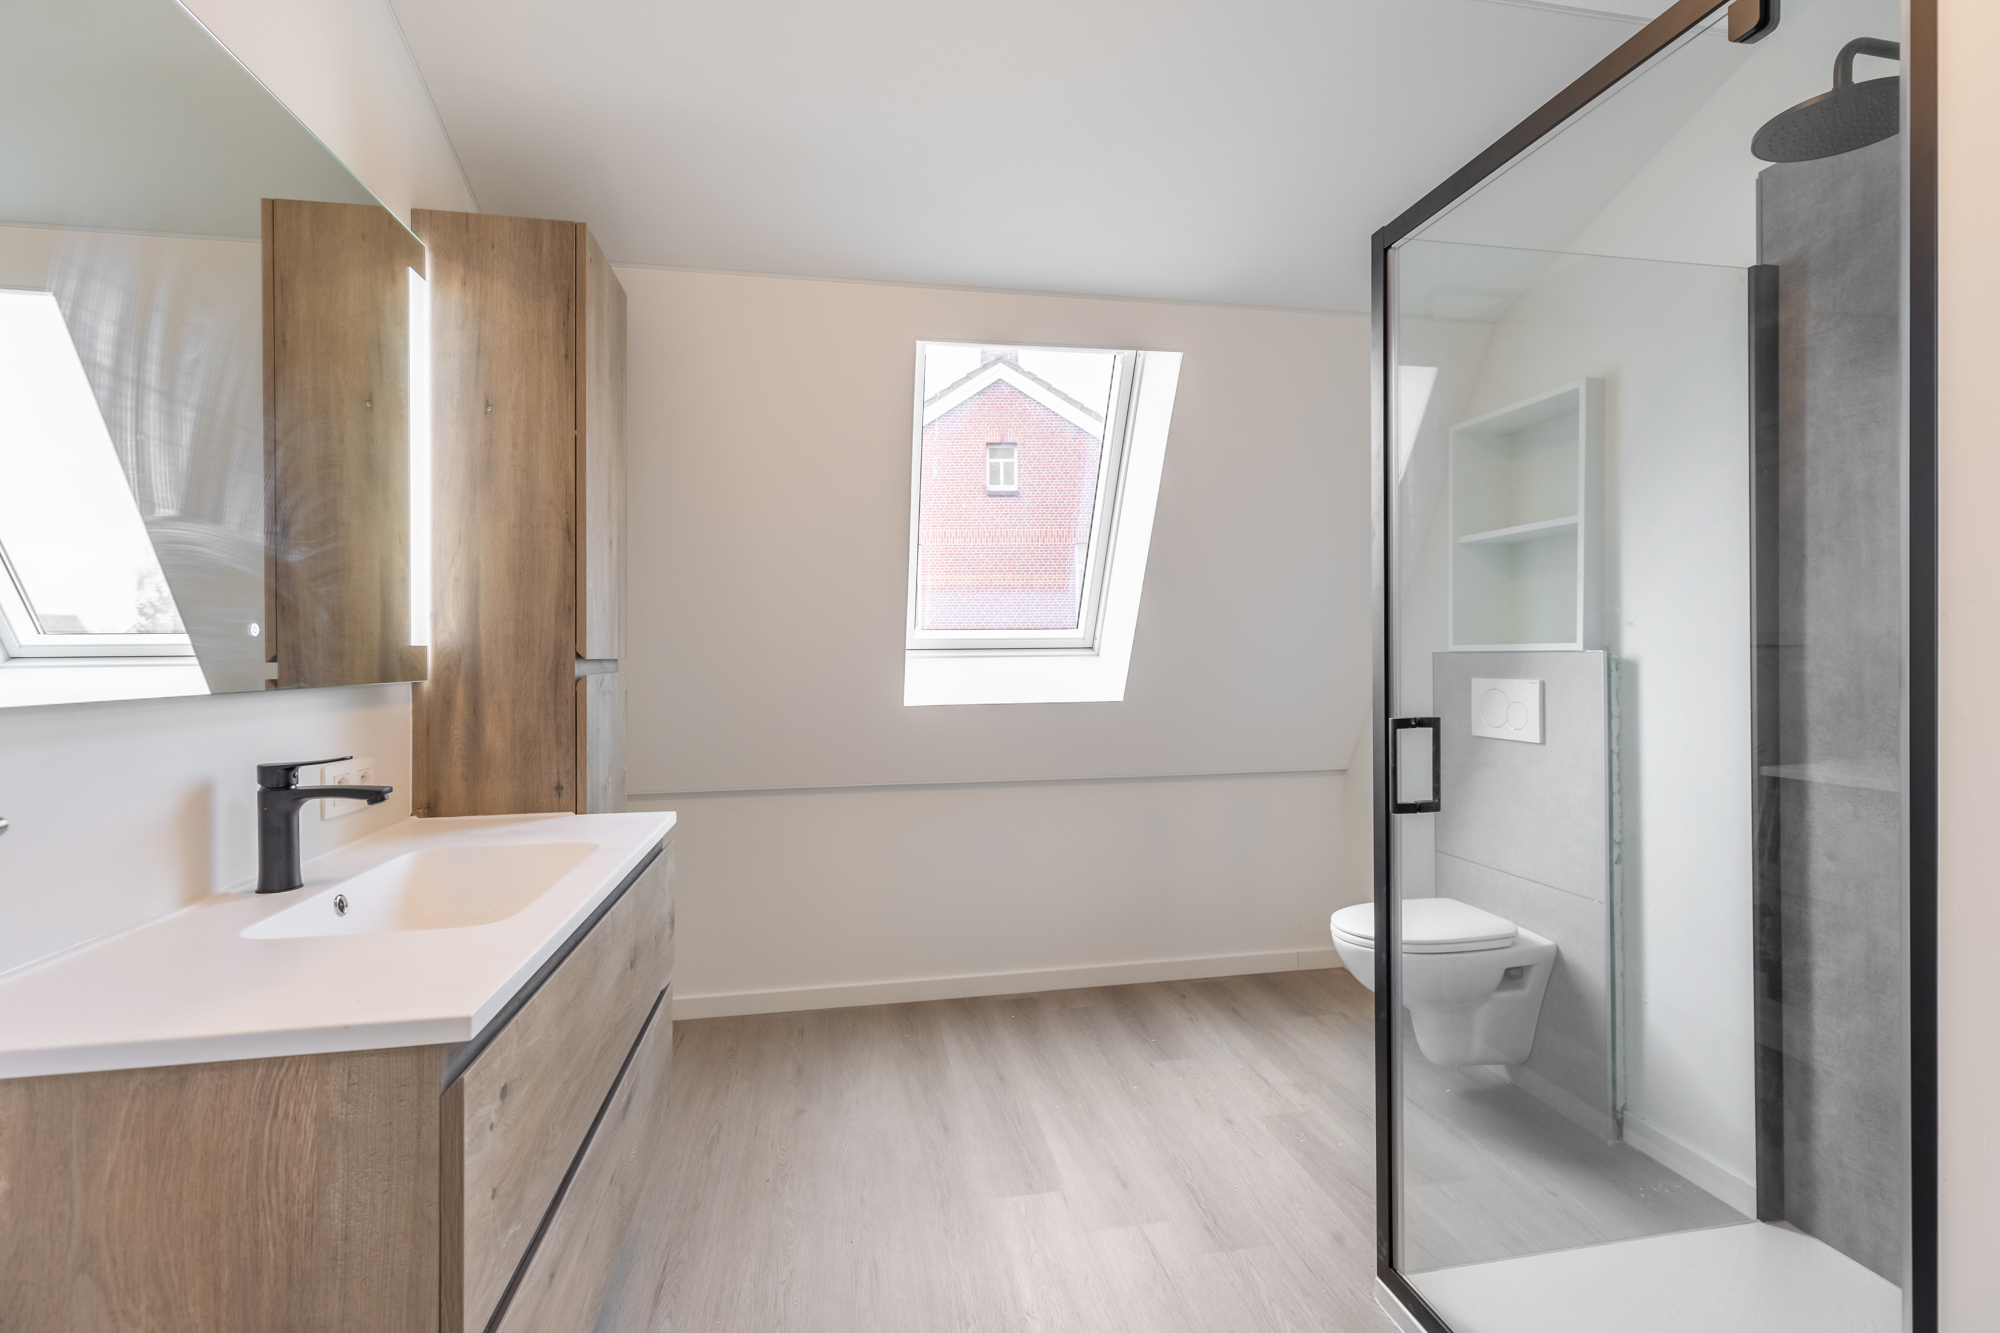 IDEALIS VASTGOED – Charmante en volledig gerenoveerde woning met een gezellige leefruimte, uitgeruste keuken, knappe slaapkamer én ruime badkamer! foto 15